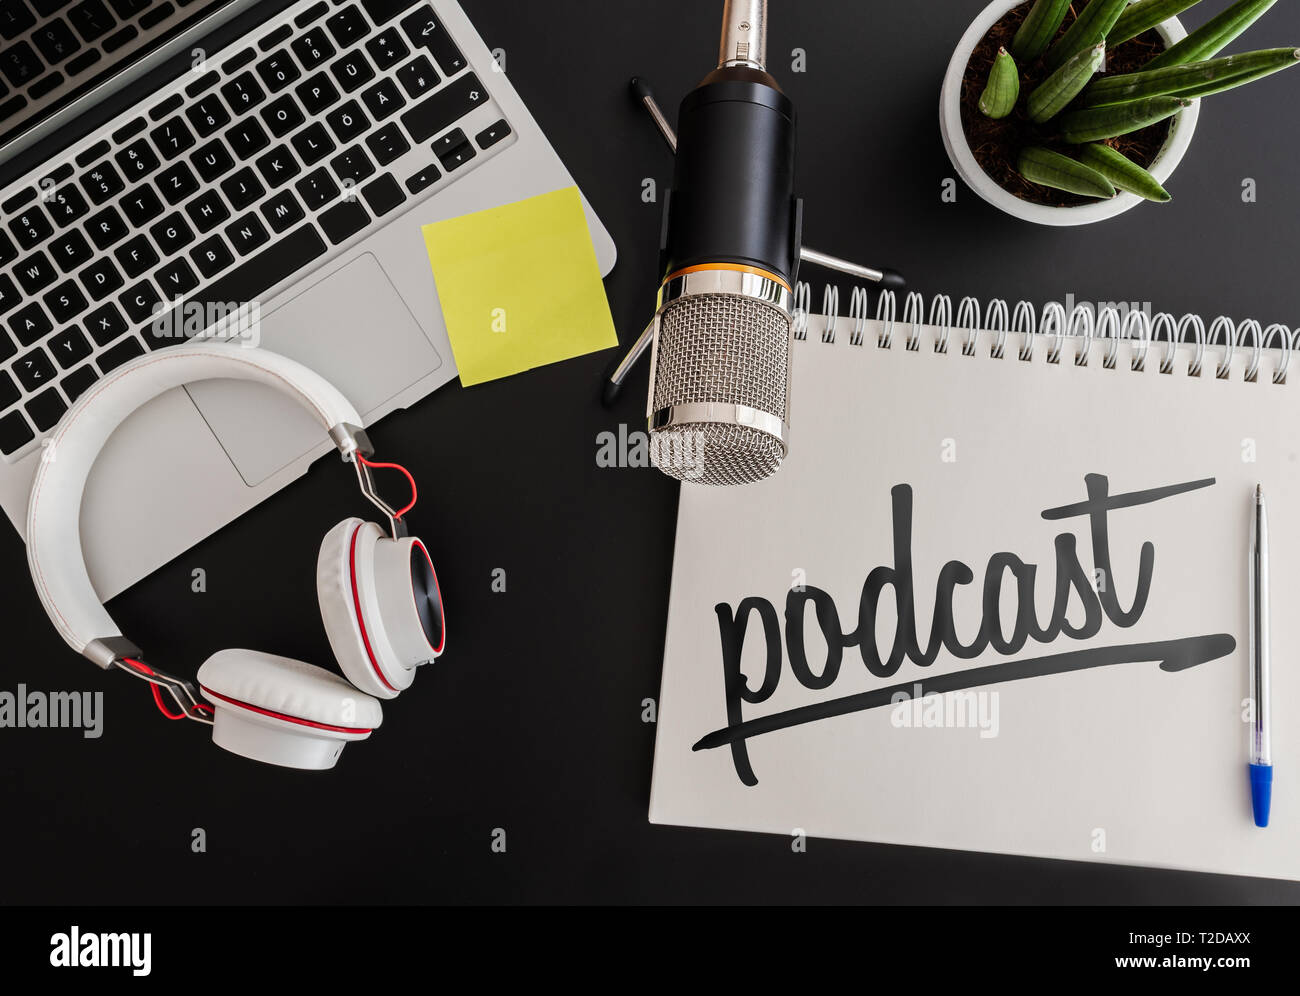 Concepto de grabación de podcast con micrófono, auriculares y ordenador portátil junto a notas sobre la mesa oscura Foto de stock